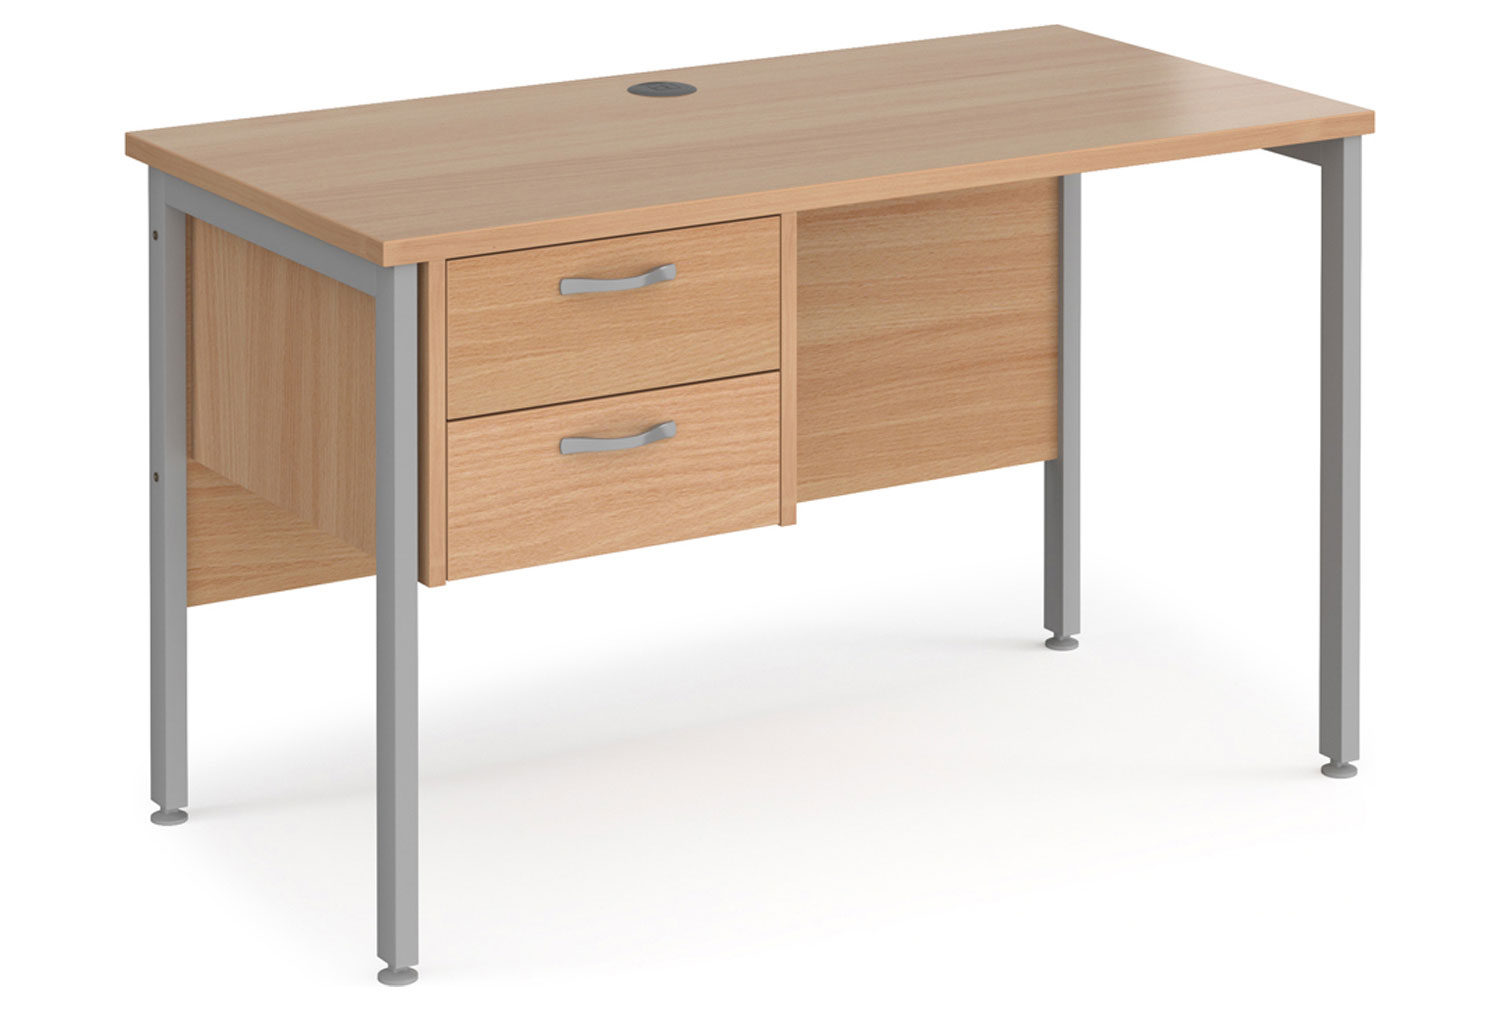 Alcott H-Leg Narrow Rectangular Home Office Desk With Pedestal, 120w60dx73h (cm), Silver Frame, Beech, Fully Installed